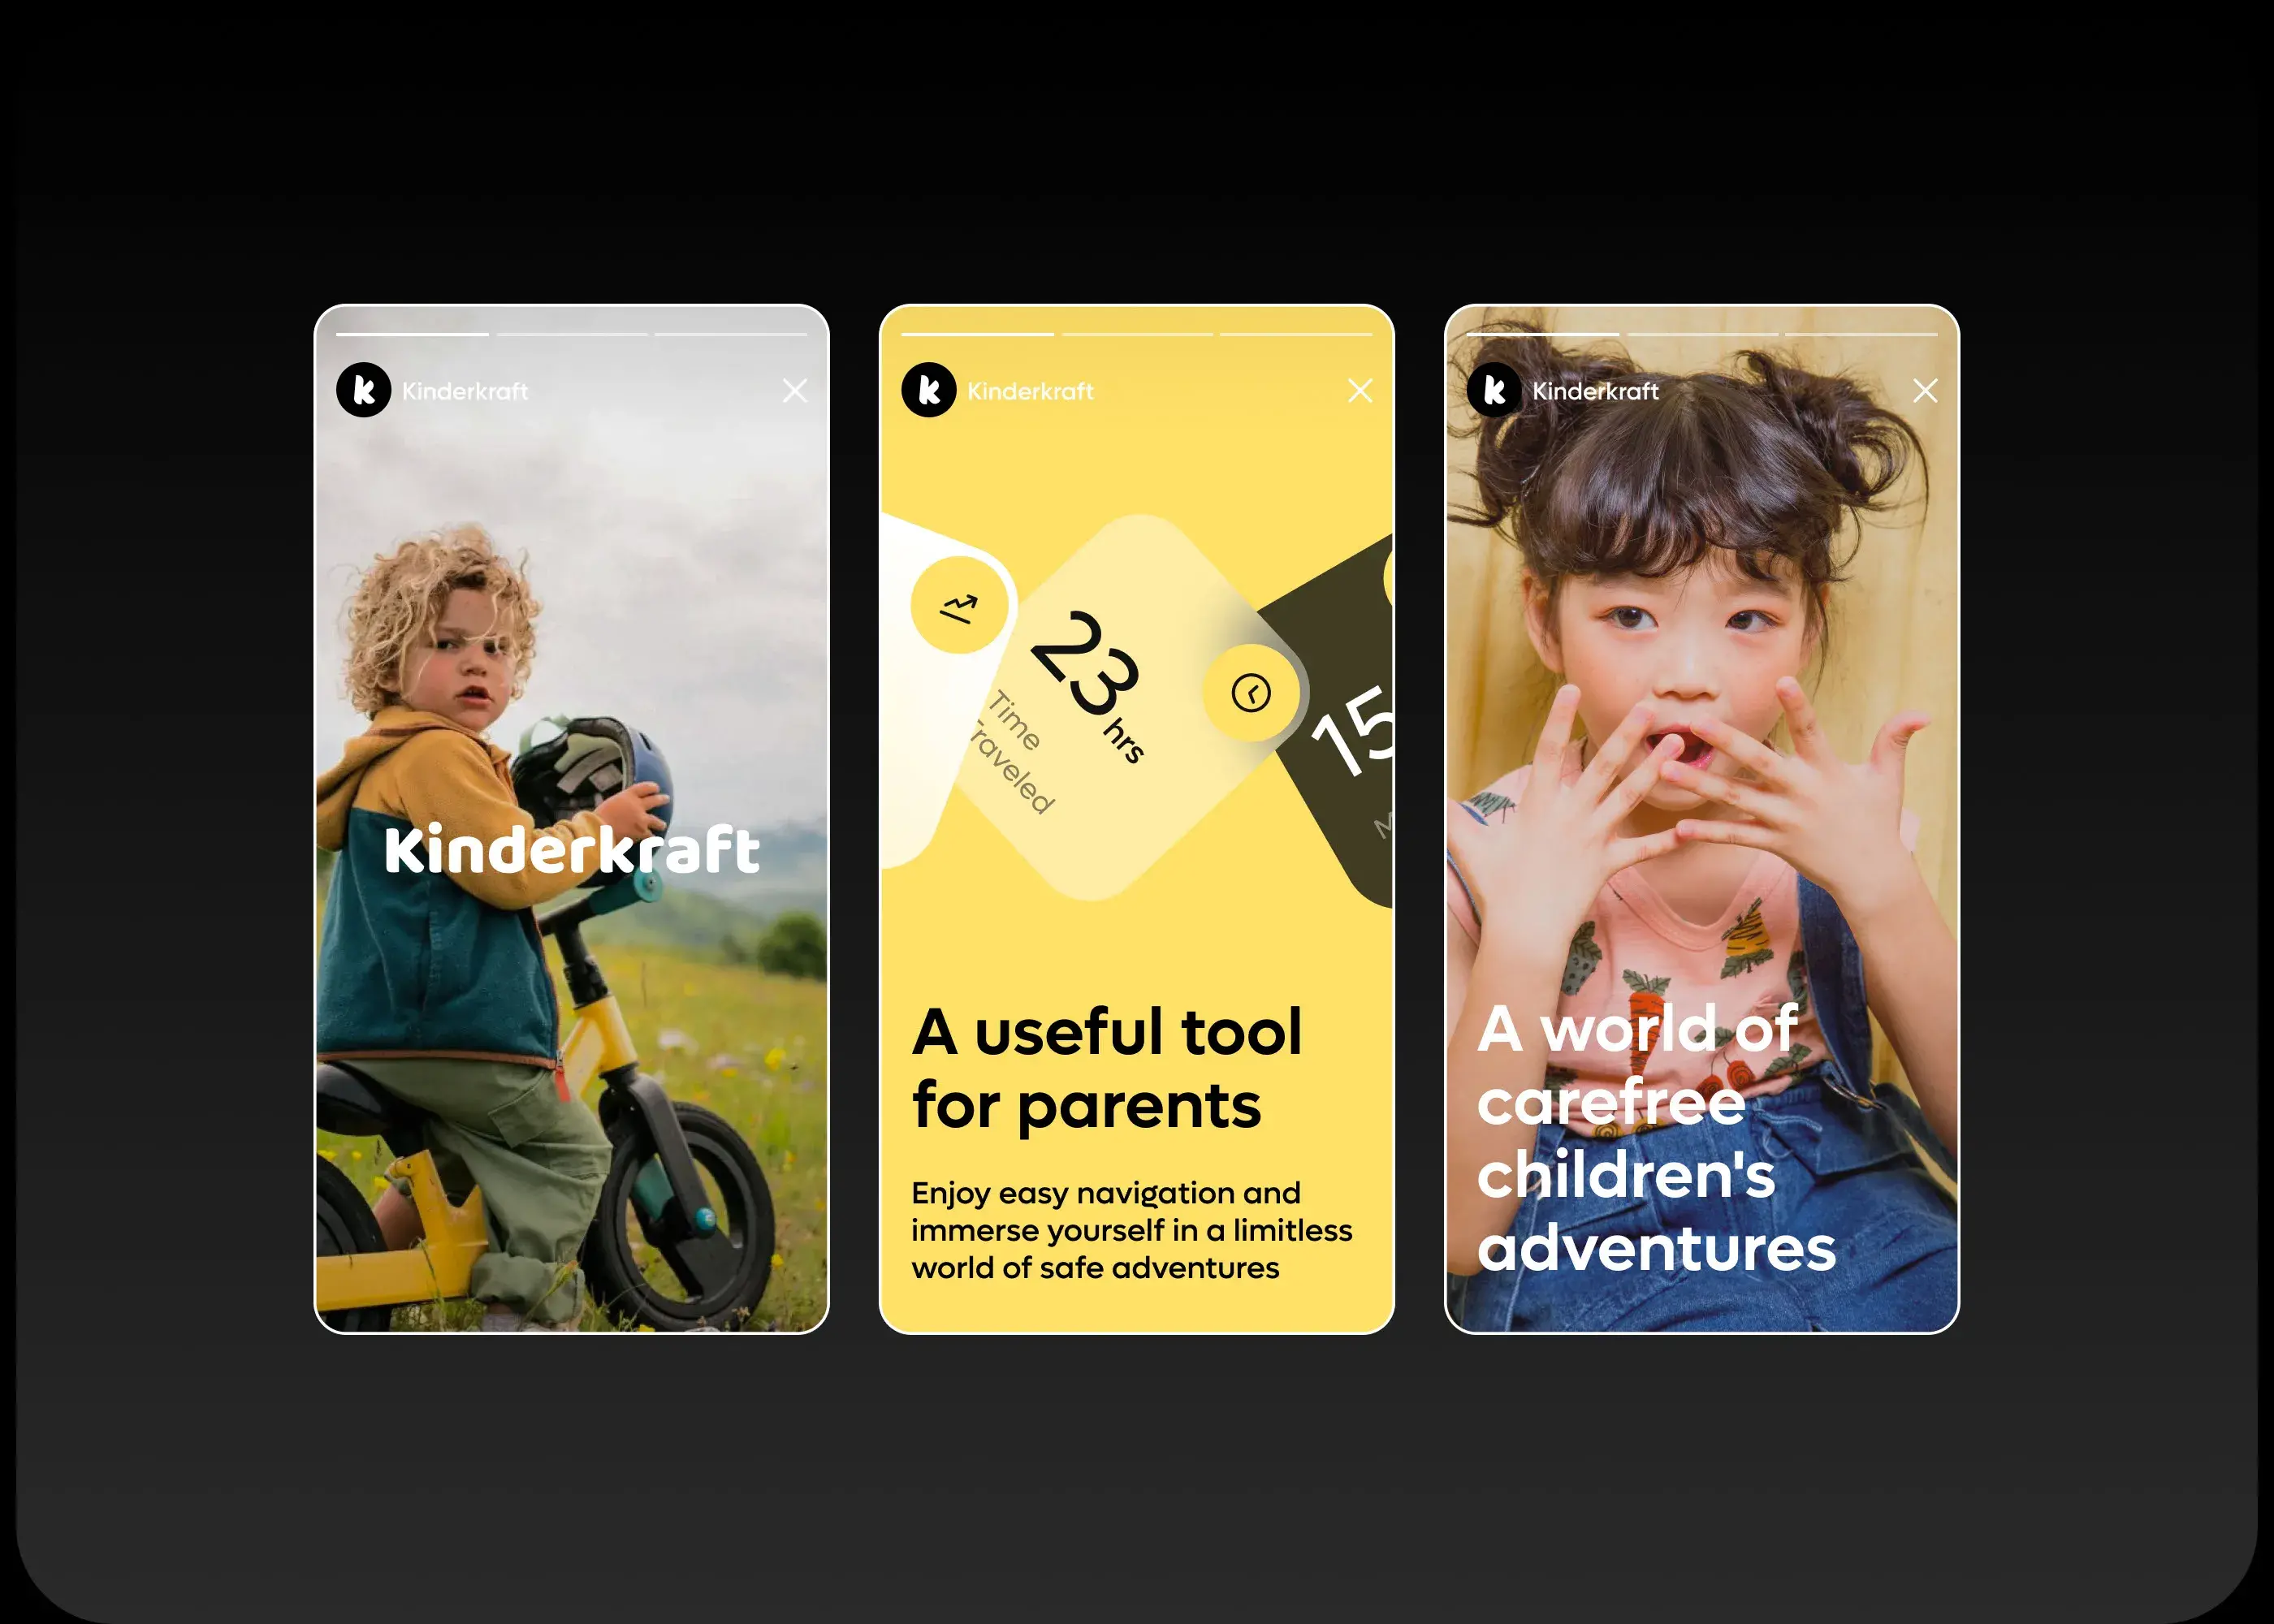 Kinderkraft Goswift App - UX UI Design - App’s